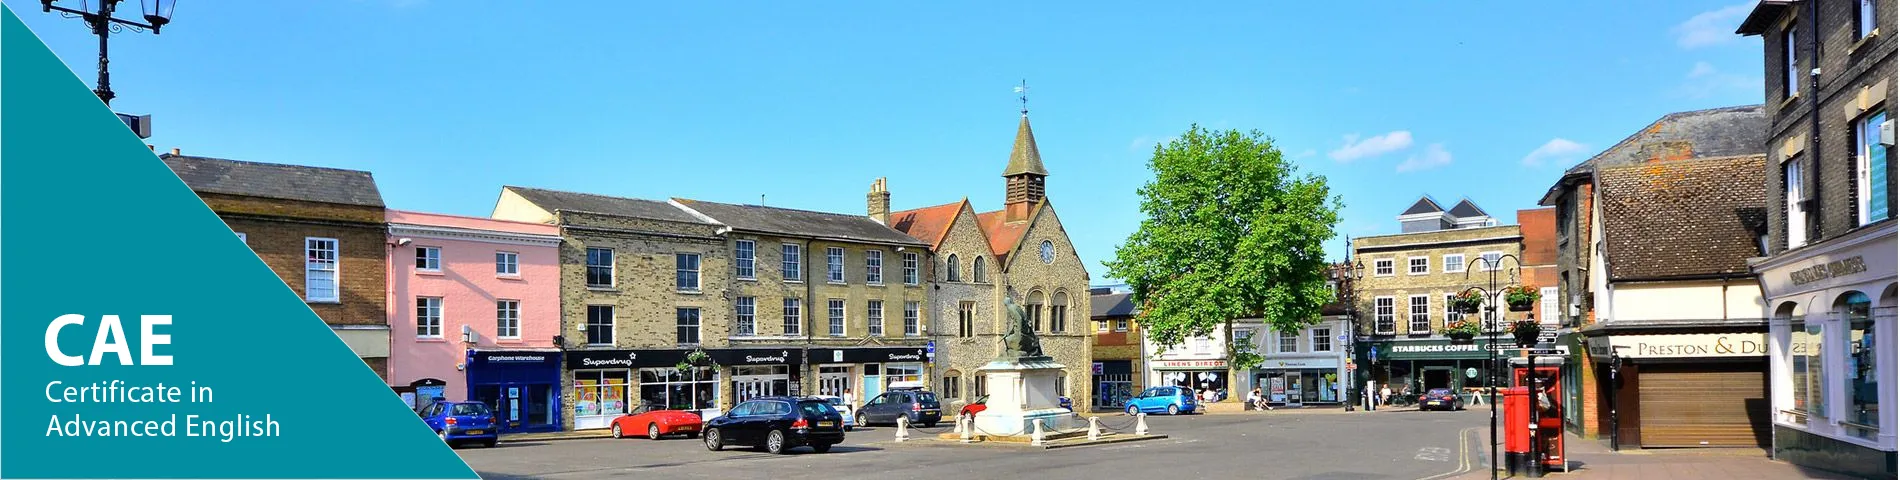 Bury St. Edmunds - Cambridge Advanced